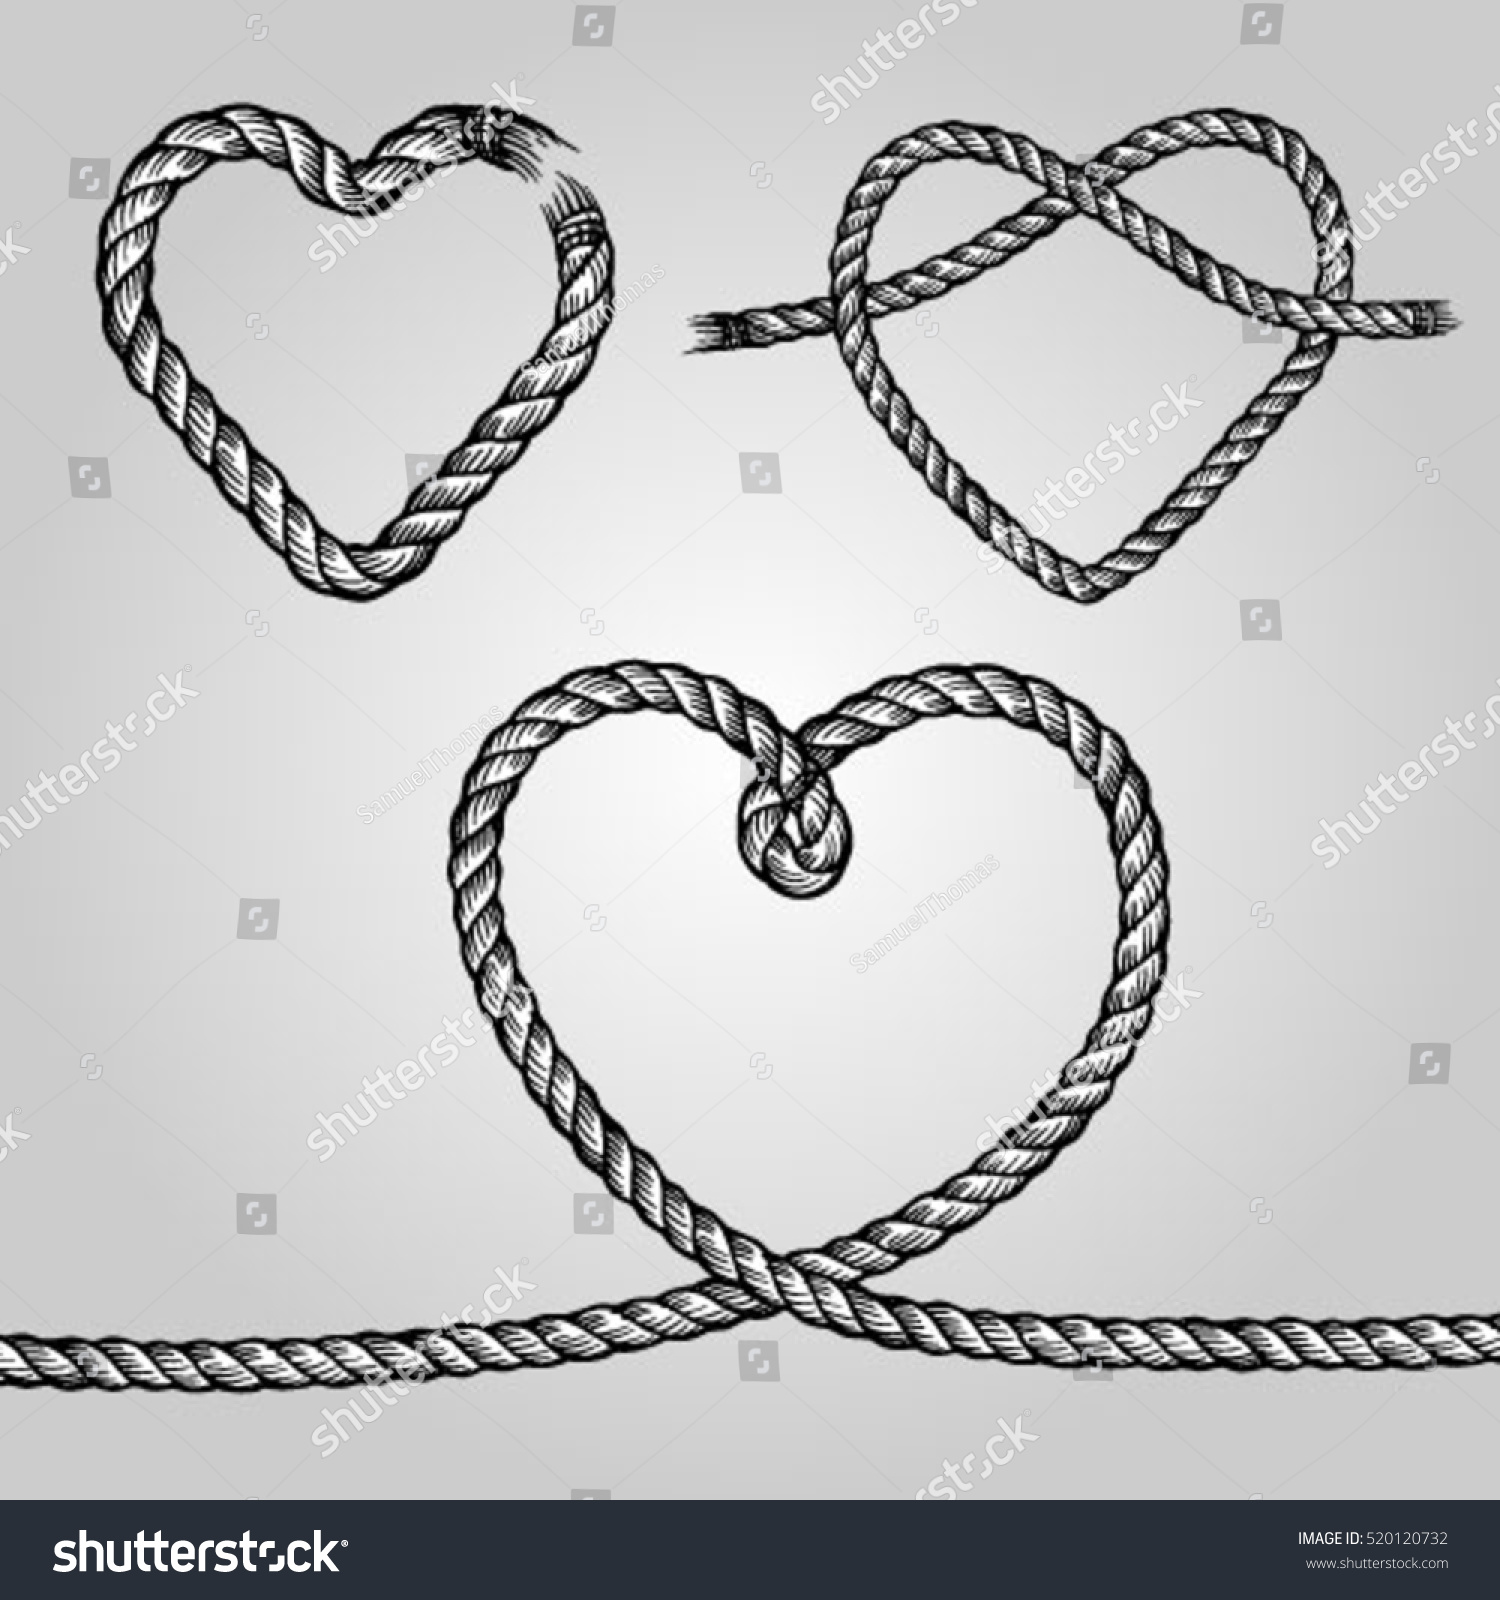 Rope heart photo